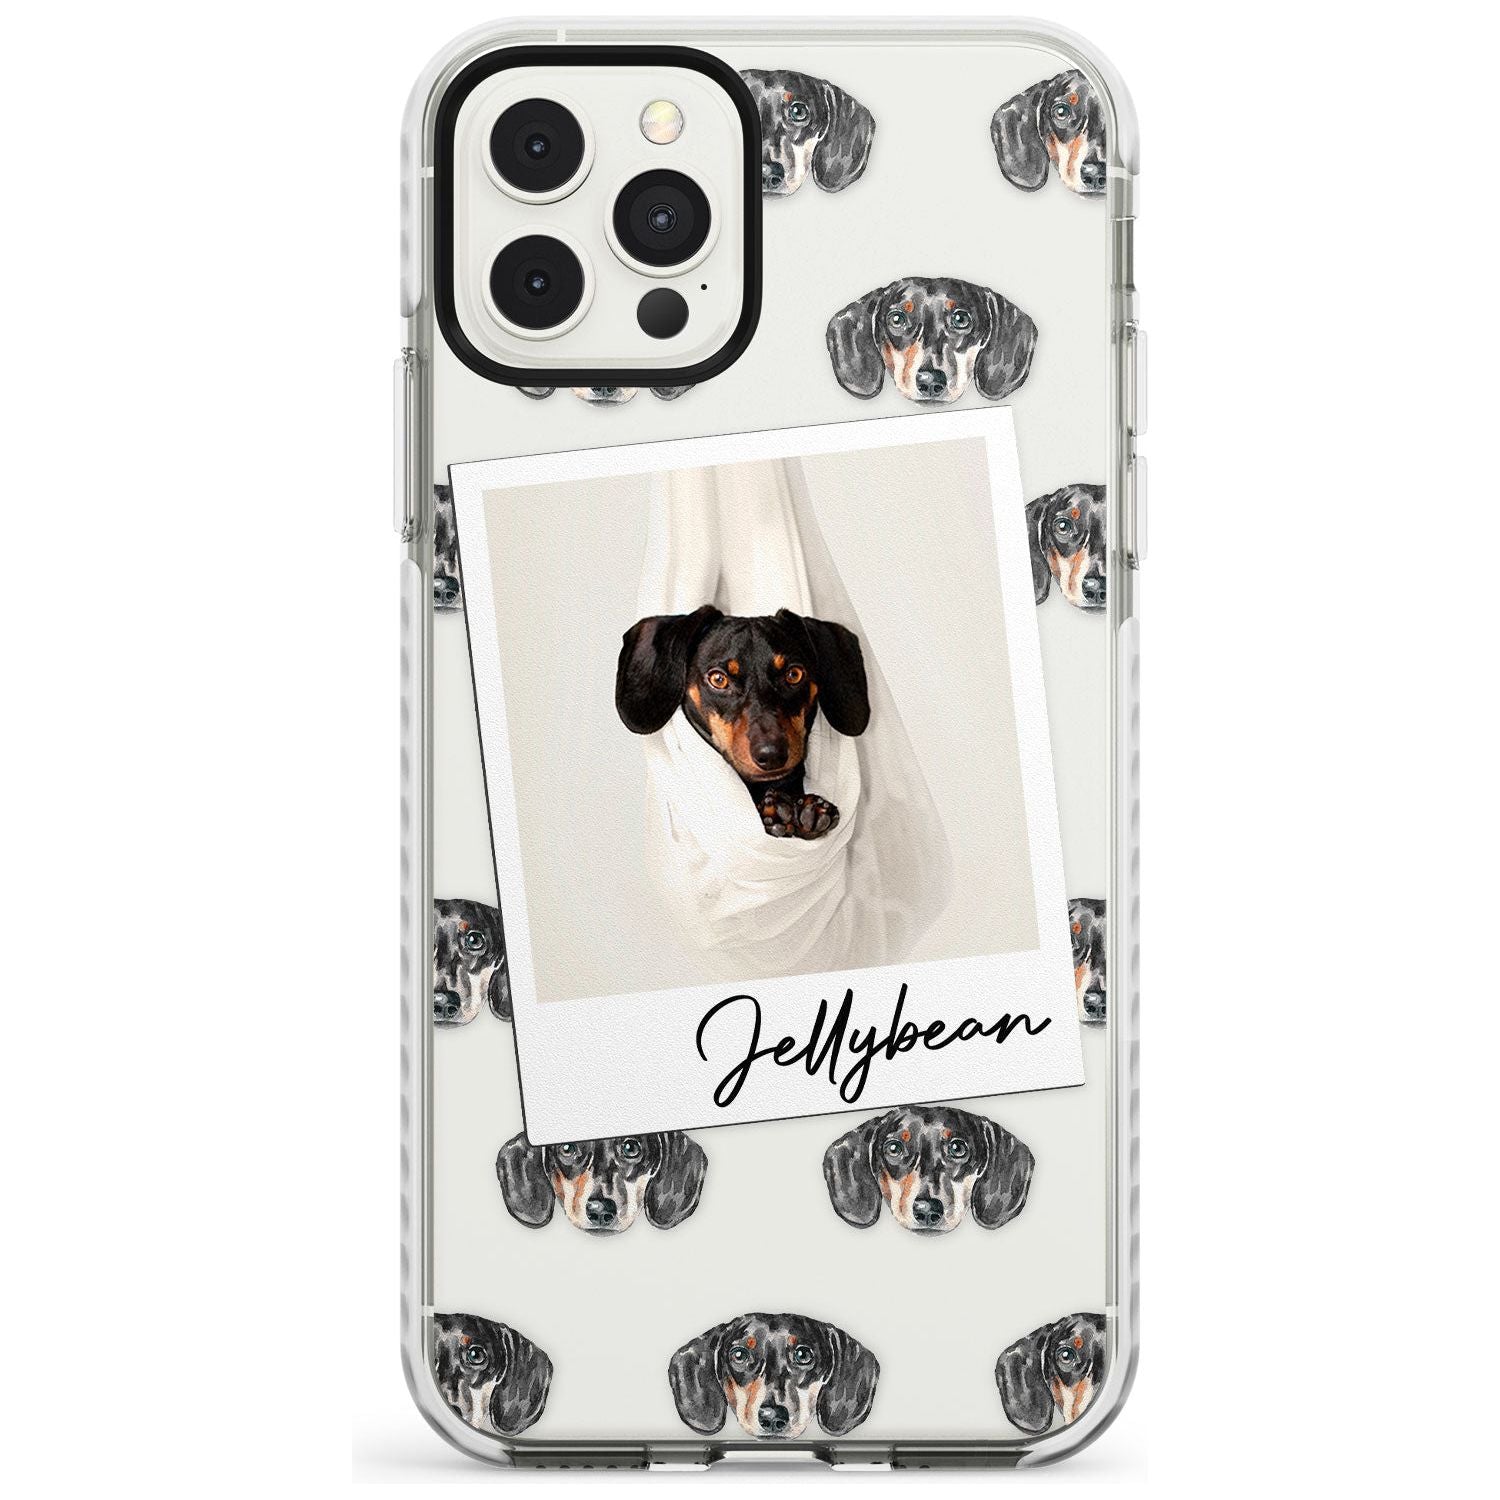 Dachshund, Black- Custom Dog Photo Slim TPU Phone Case for iPhone 11 Pro Max